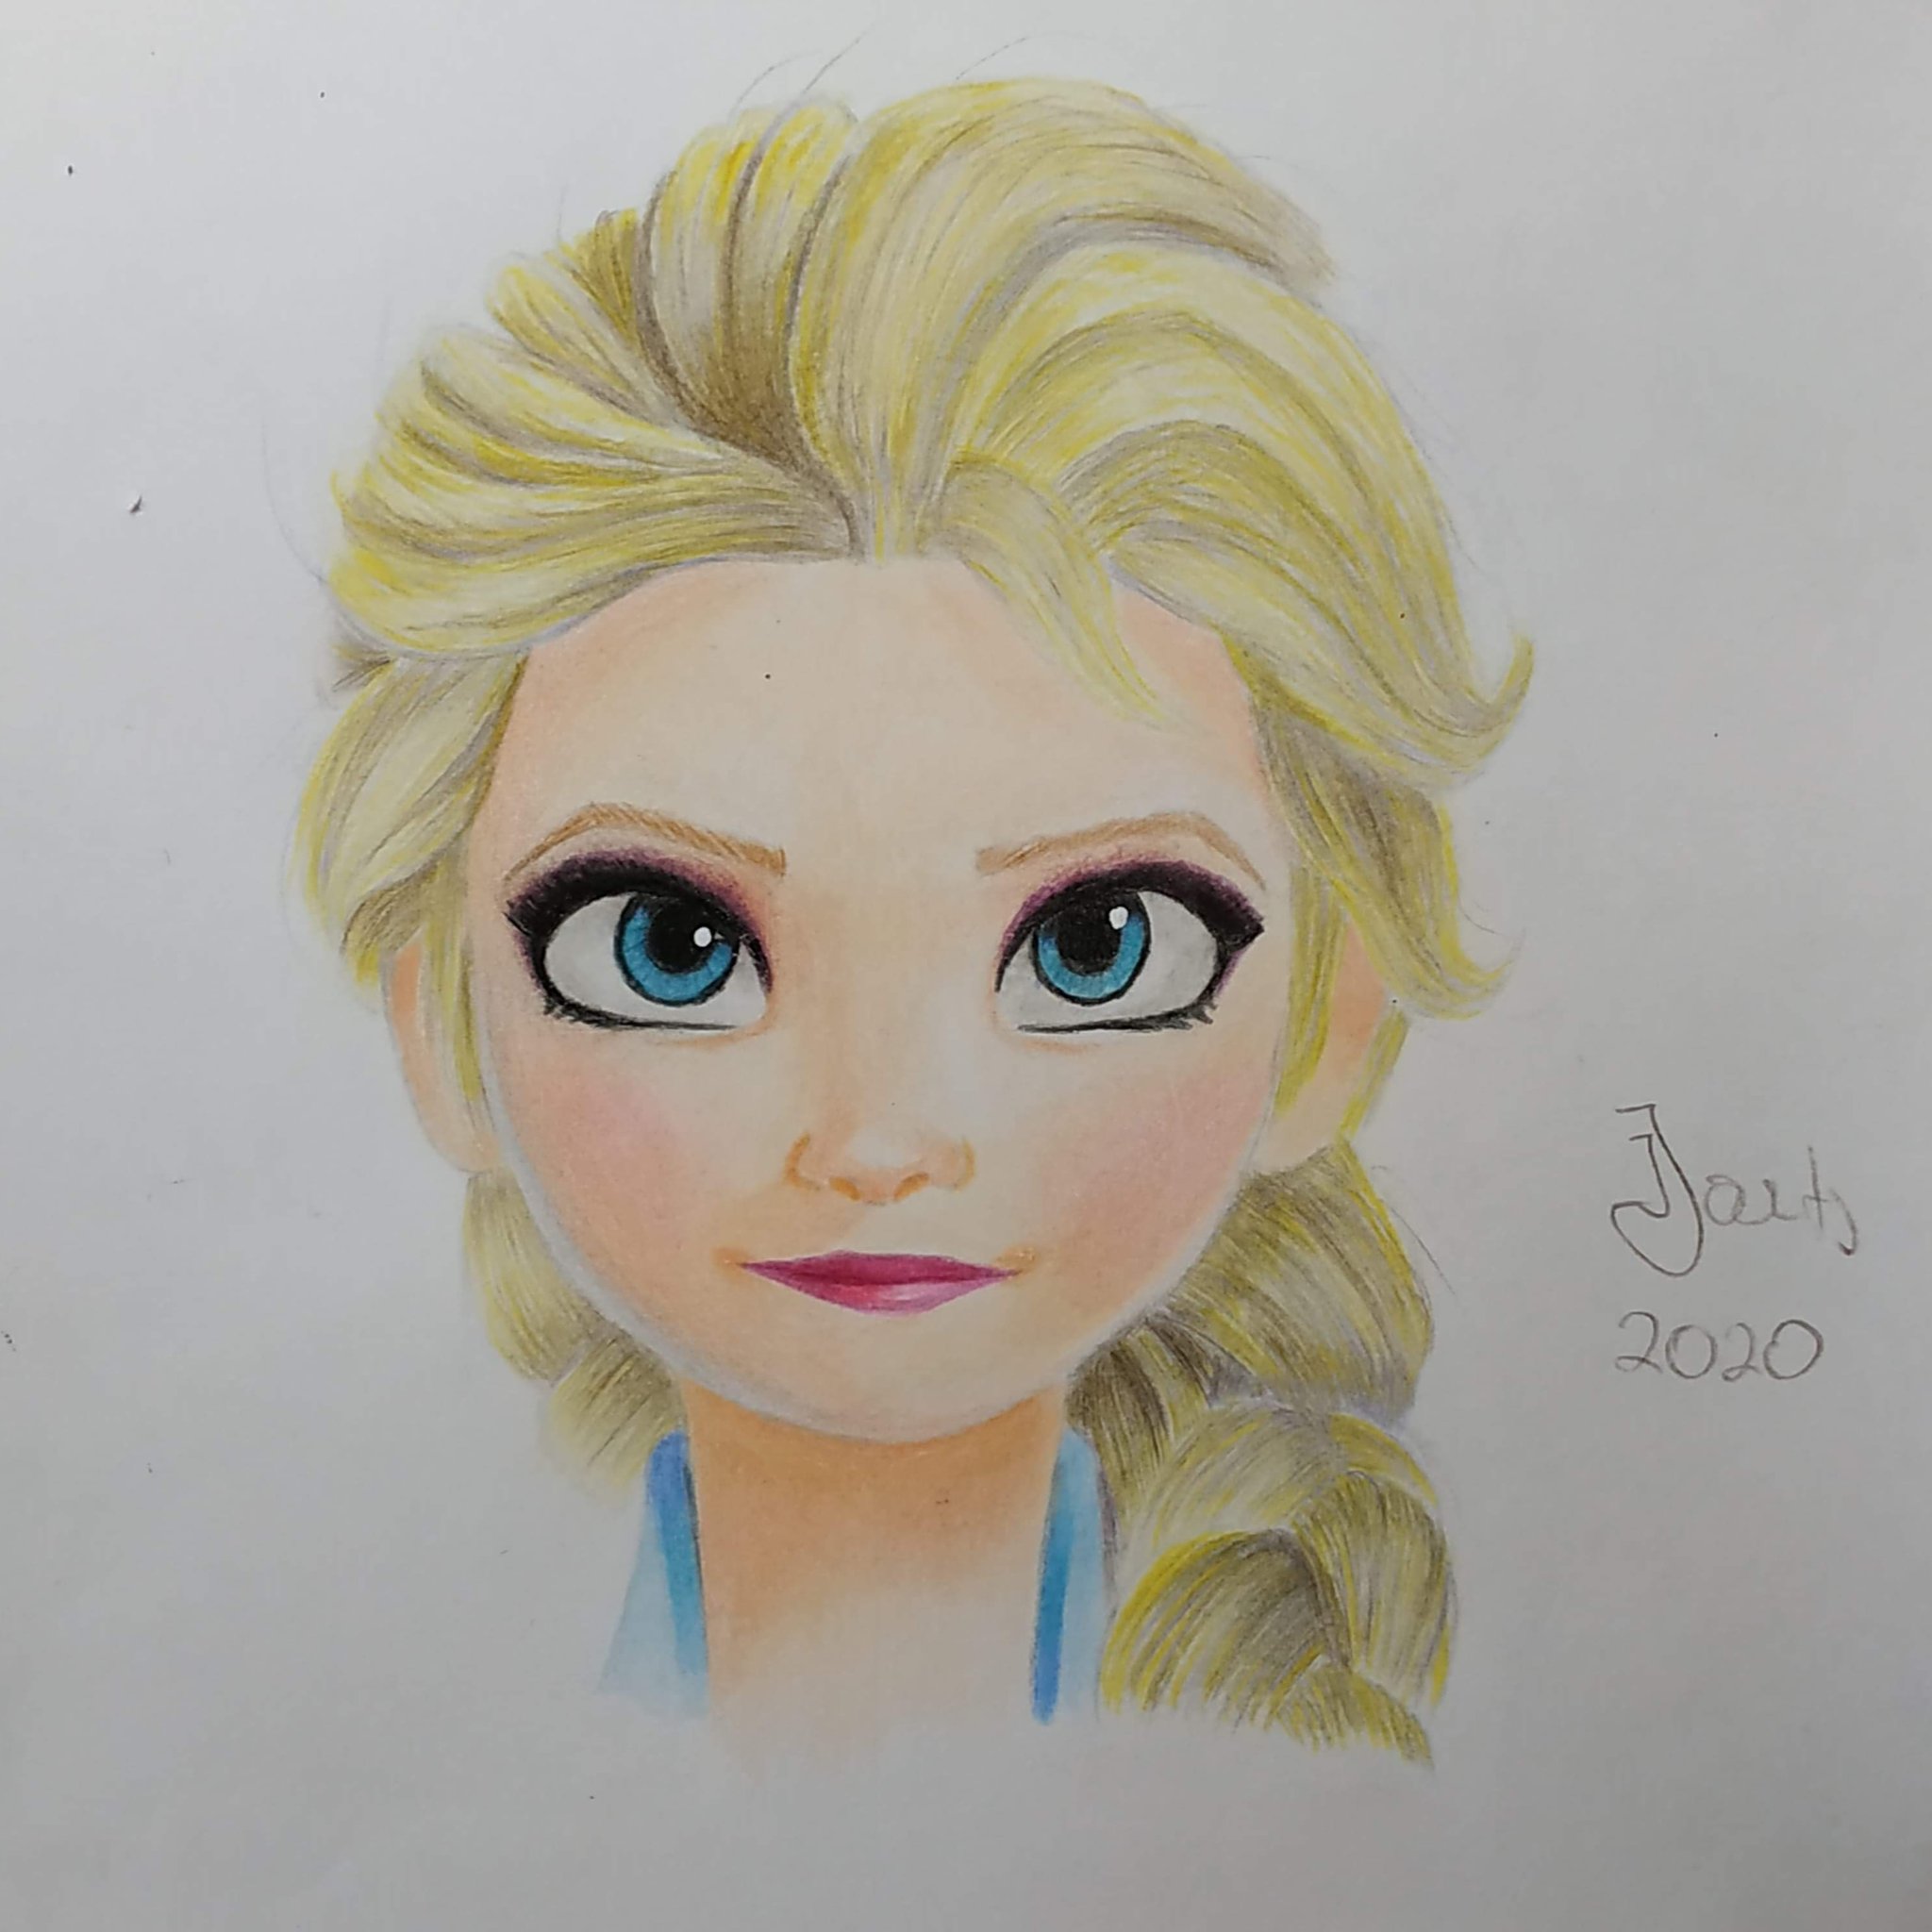 Funny and Cute Caricatures on Twitter how to draw Elsa Frozen 2  caricature portrait of Skai Jackson httpstcoz5S71dKLuU HowtodrawElsa  drawelsa howtodraw howtodrawFrozen MartaSytniewski Elsa ElsaFrozen2  Frozen2 Elsacaricature SkaiJackson 